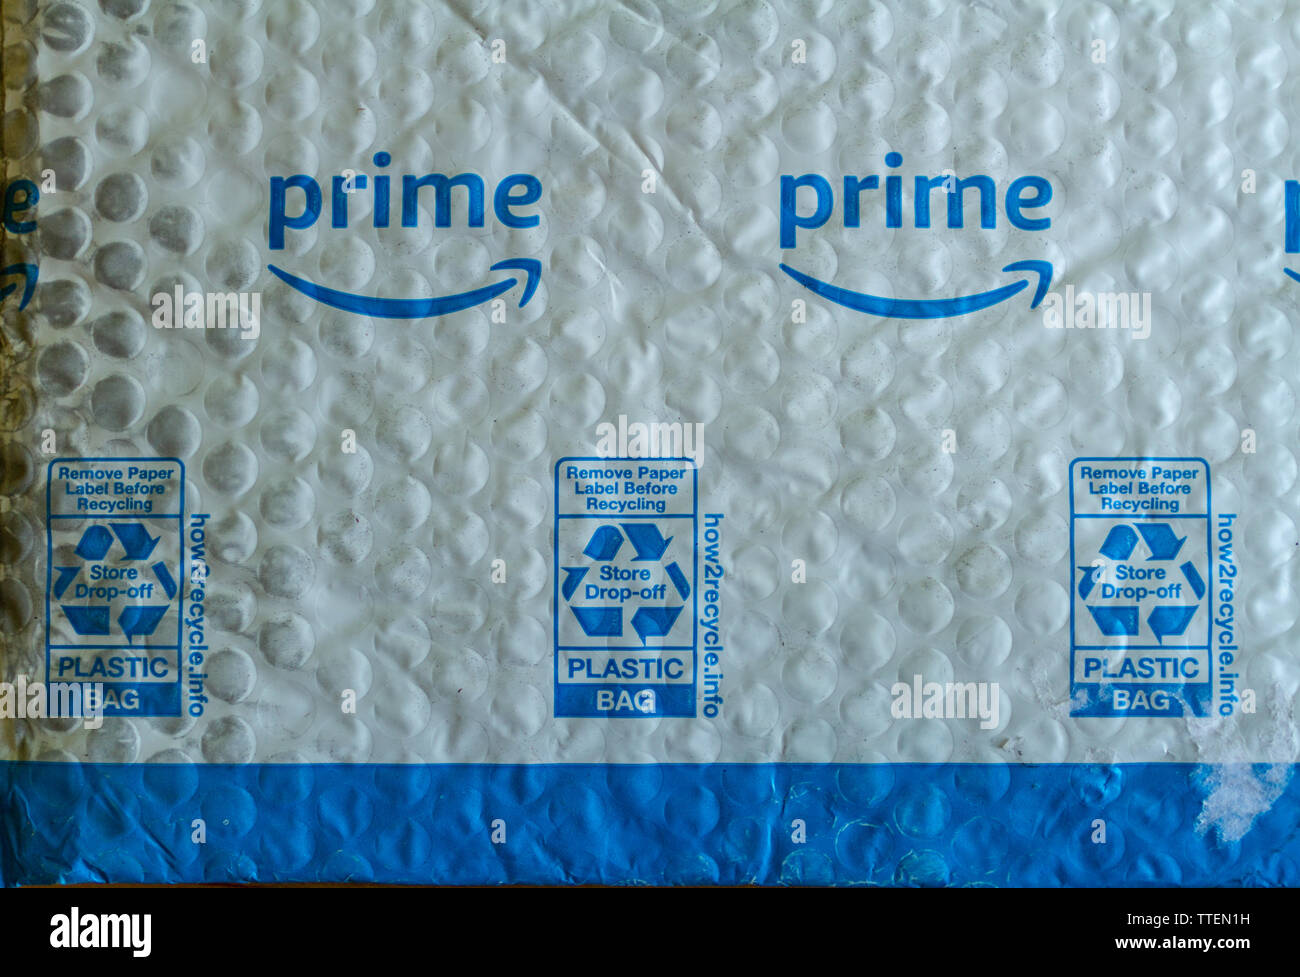 Amazon prime verpackung -Fotos und -Bildmaterial in hoher Auflösung – Alamy